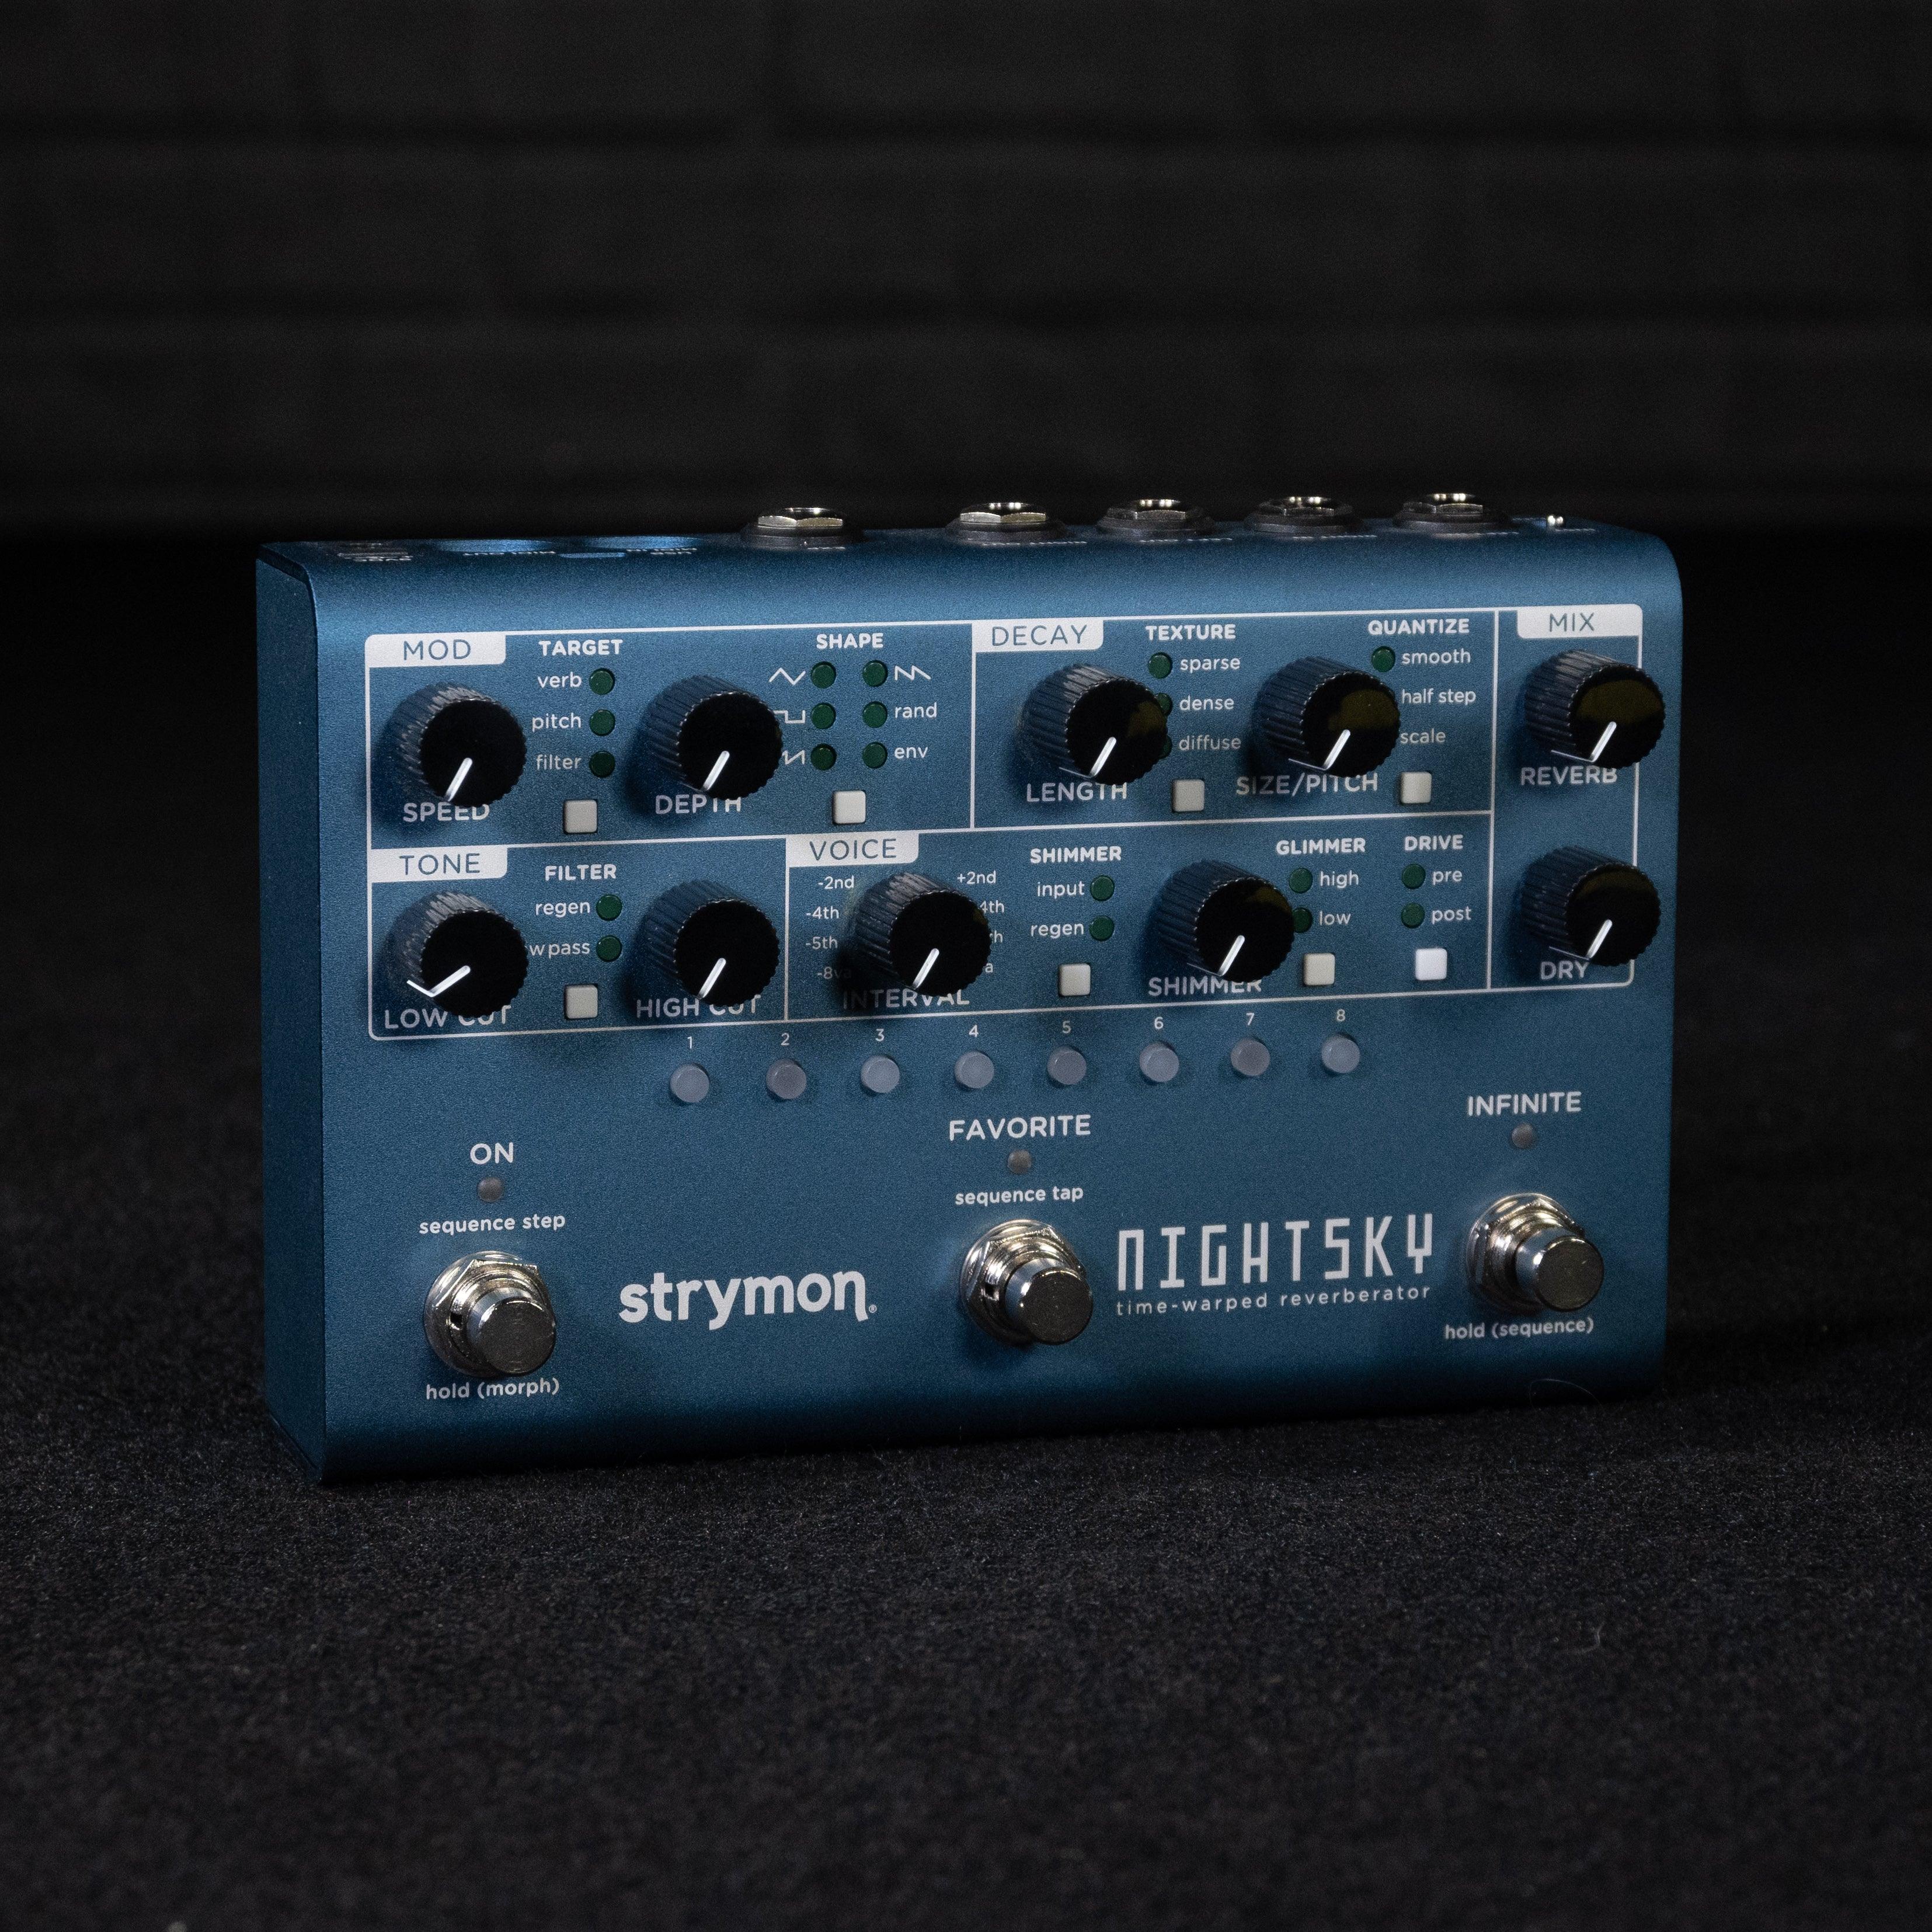 Strymon NightSky Time-Warped Reverberator - Impulse Music Co.